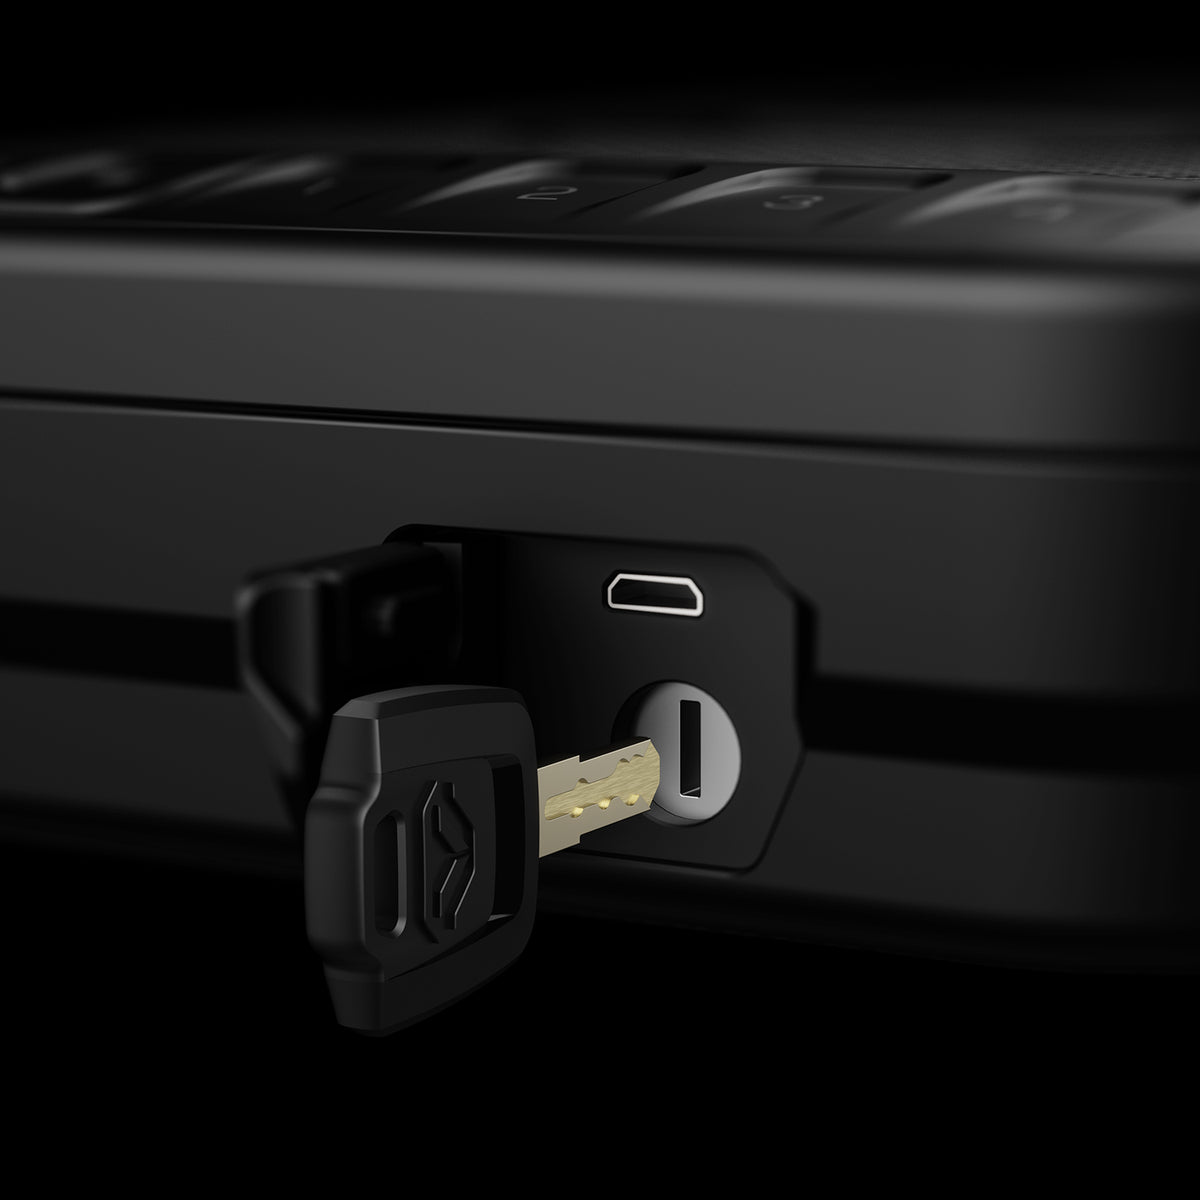 Vaultek Sig Sauer LifePod Rugged Weather Resistant Lockbox Override Key